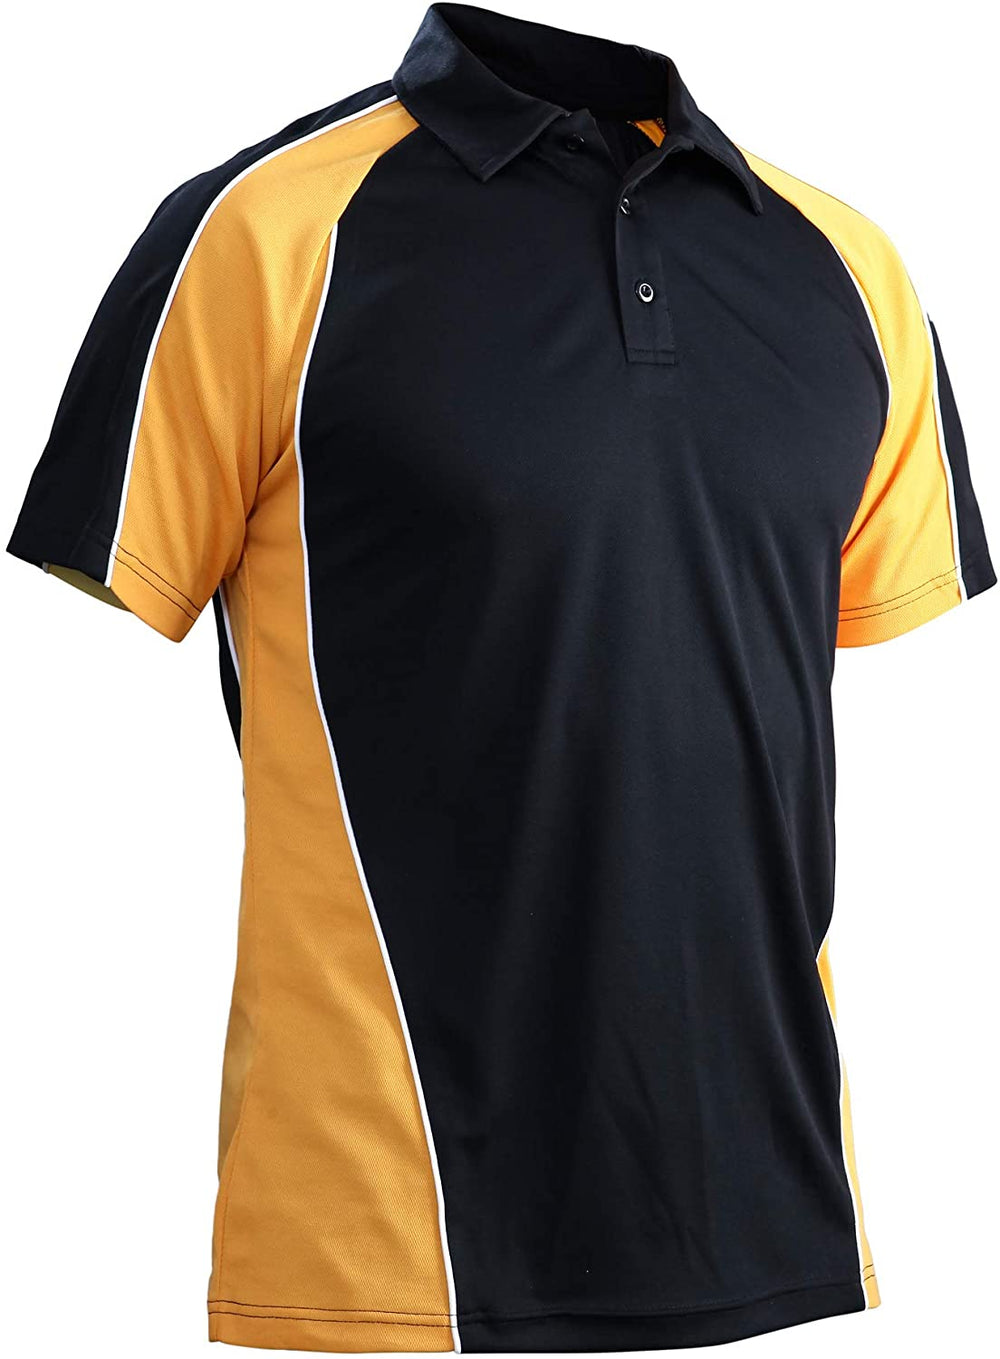 Men's Short Sleeve Golf Tennis Shirts - Wespornow